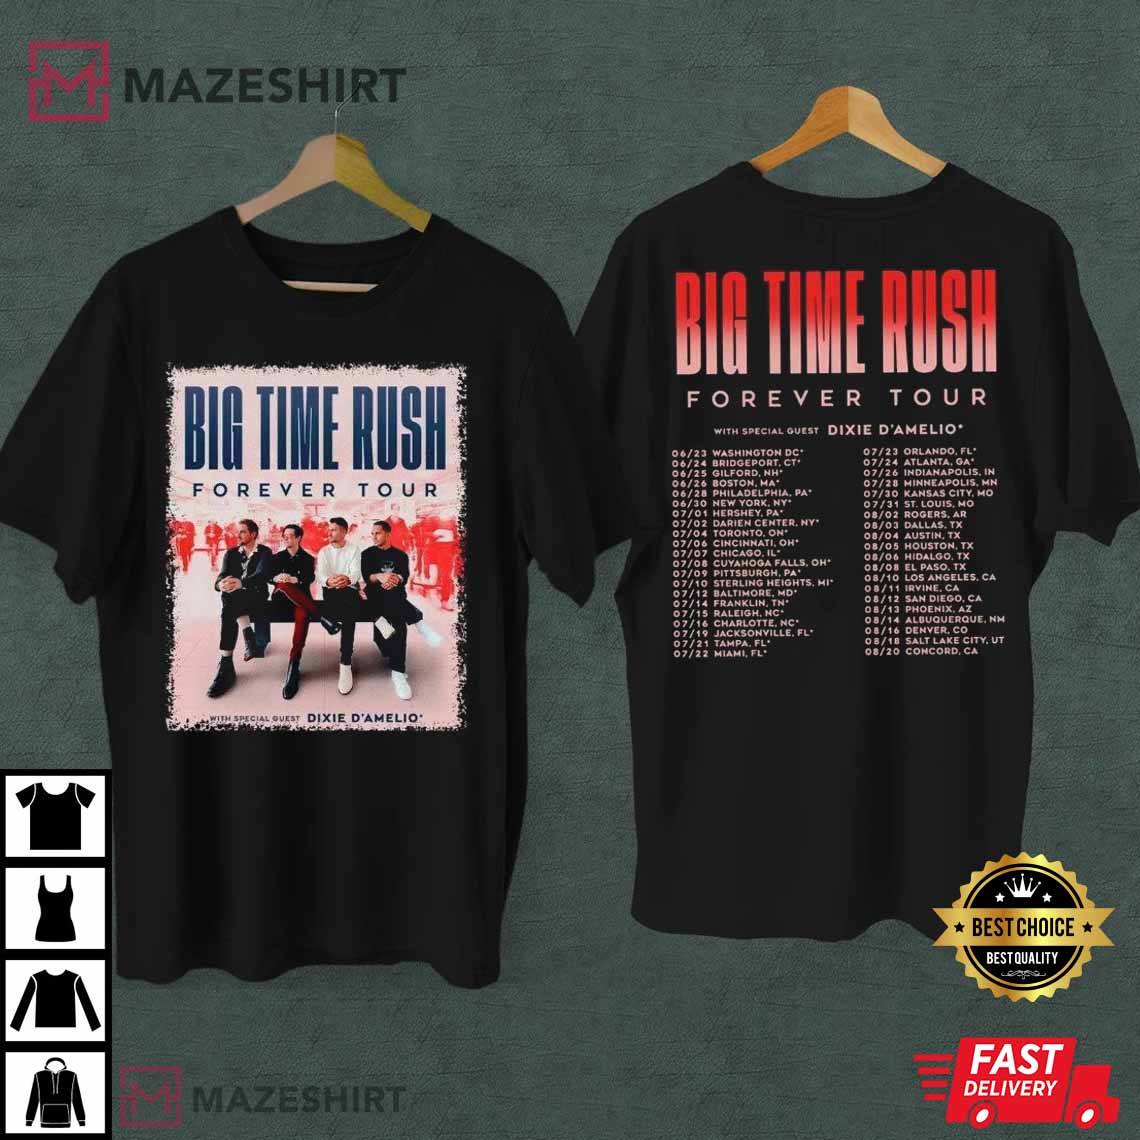 Big Time Rush Forever Tour 2022 Shirt, Gift For Fan, Big Time Rush T-Shirt